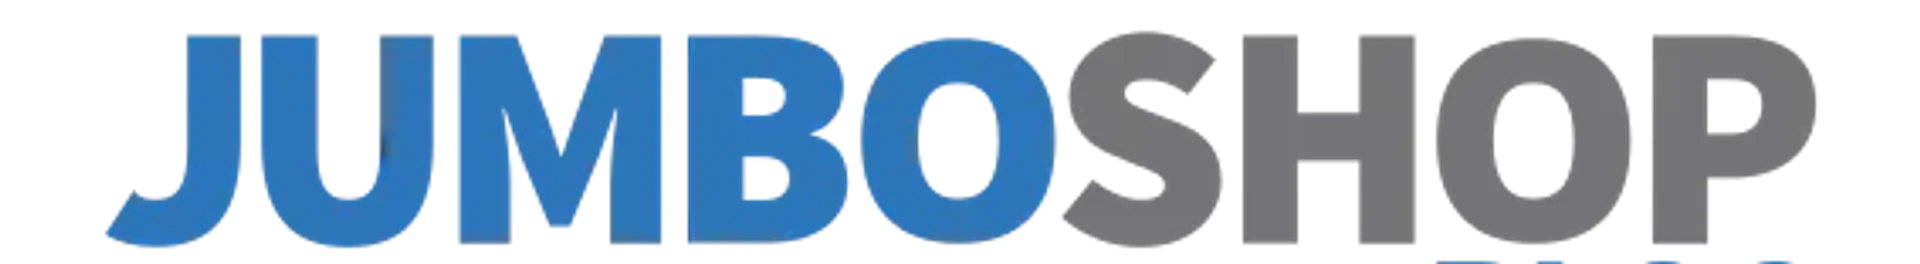 JUMBO SHOP logo die aktuell Prospekt